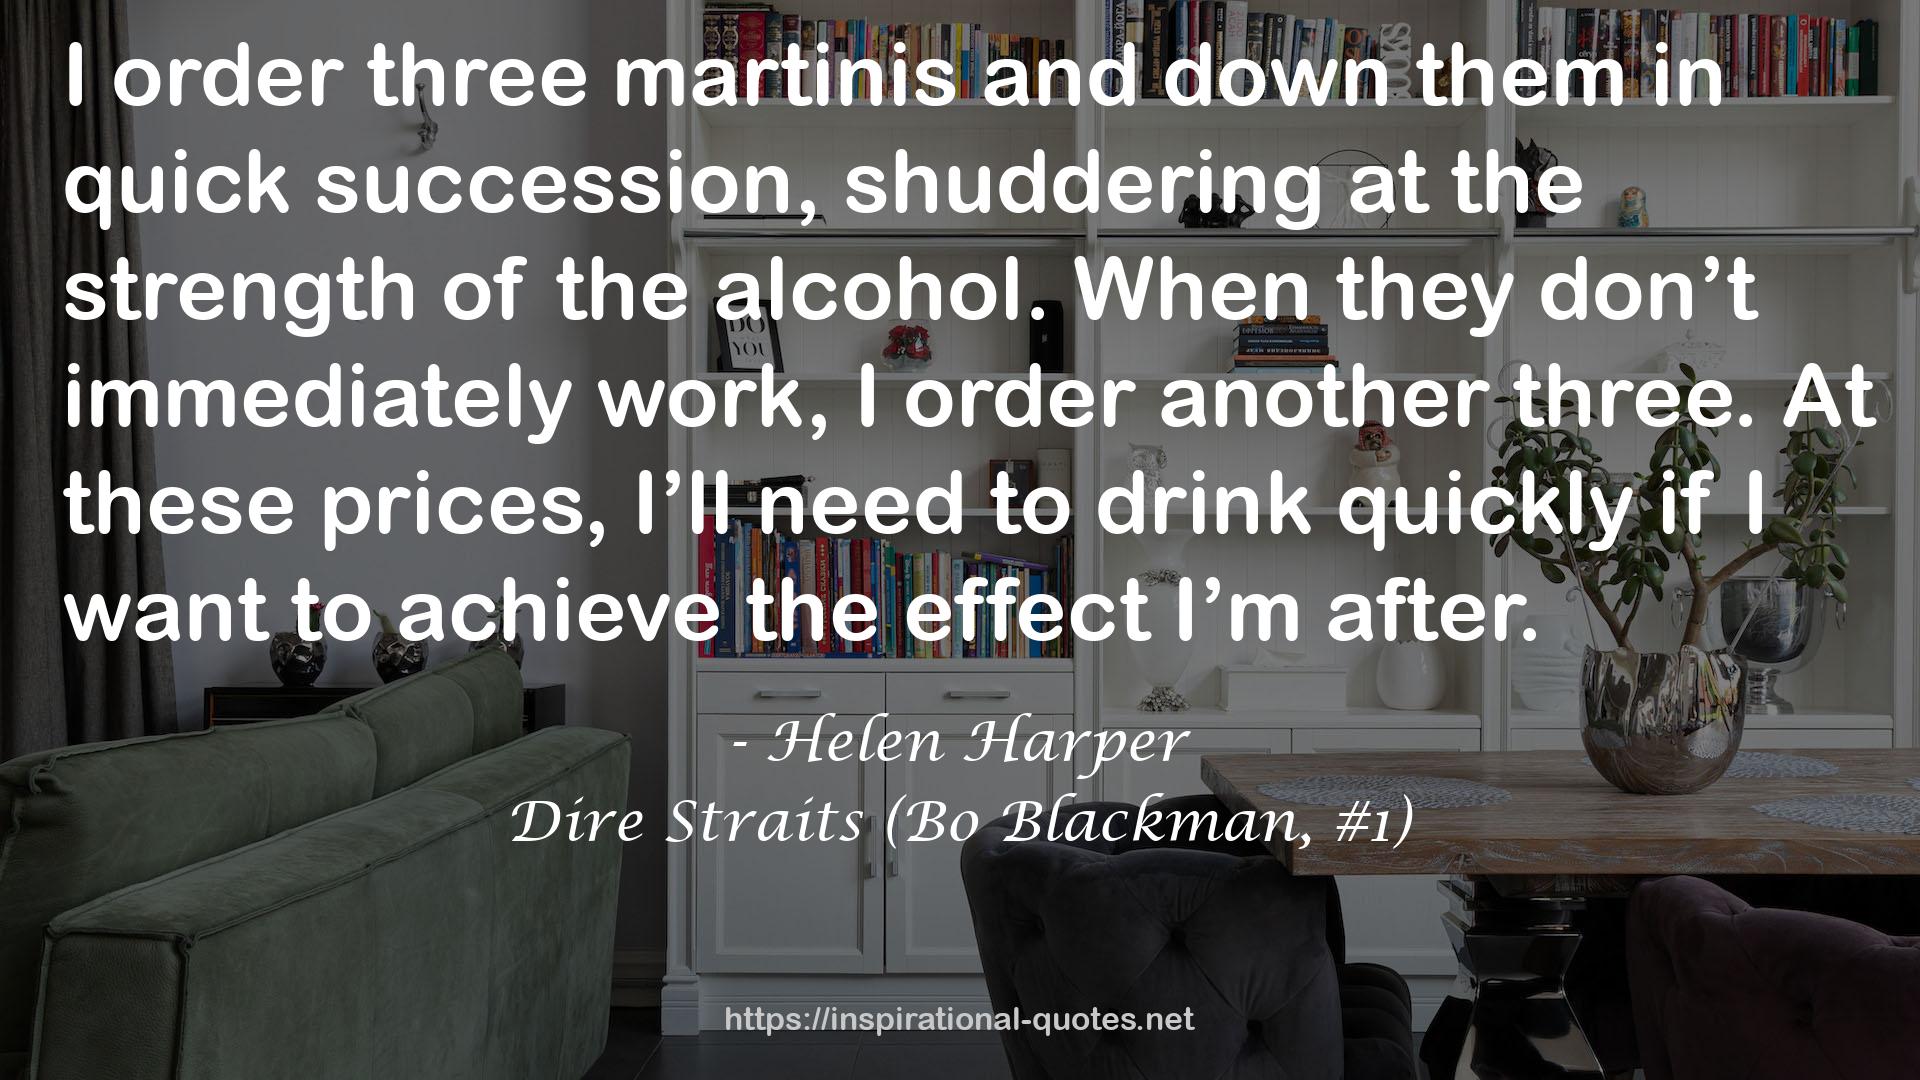 Dire Straits (Bo Blackman, #1) QUOTES